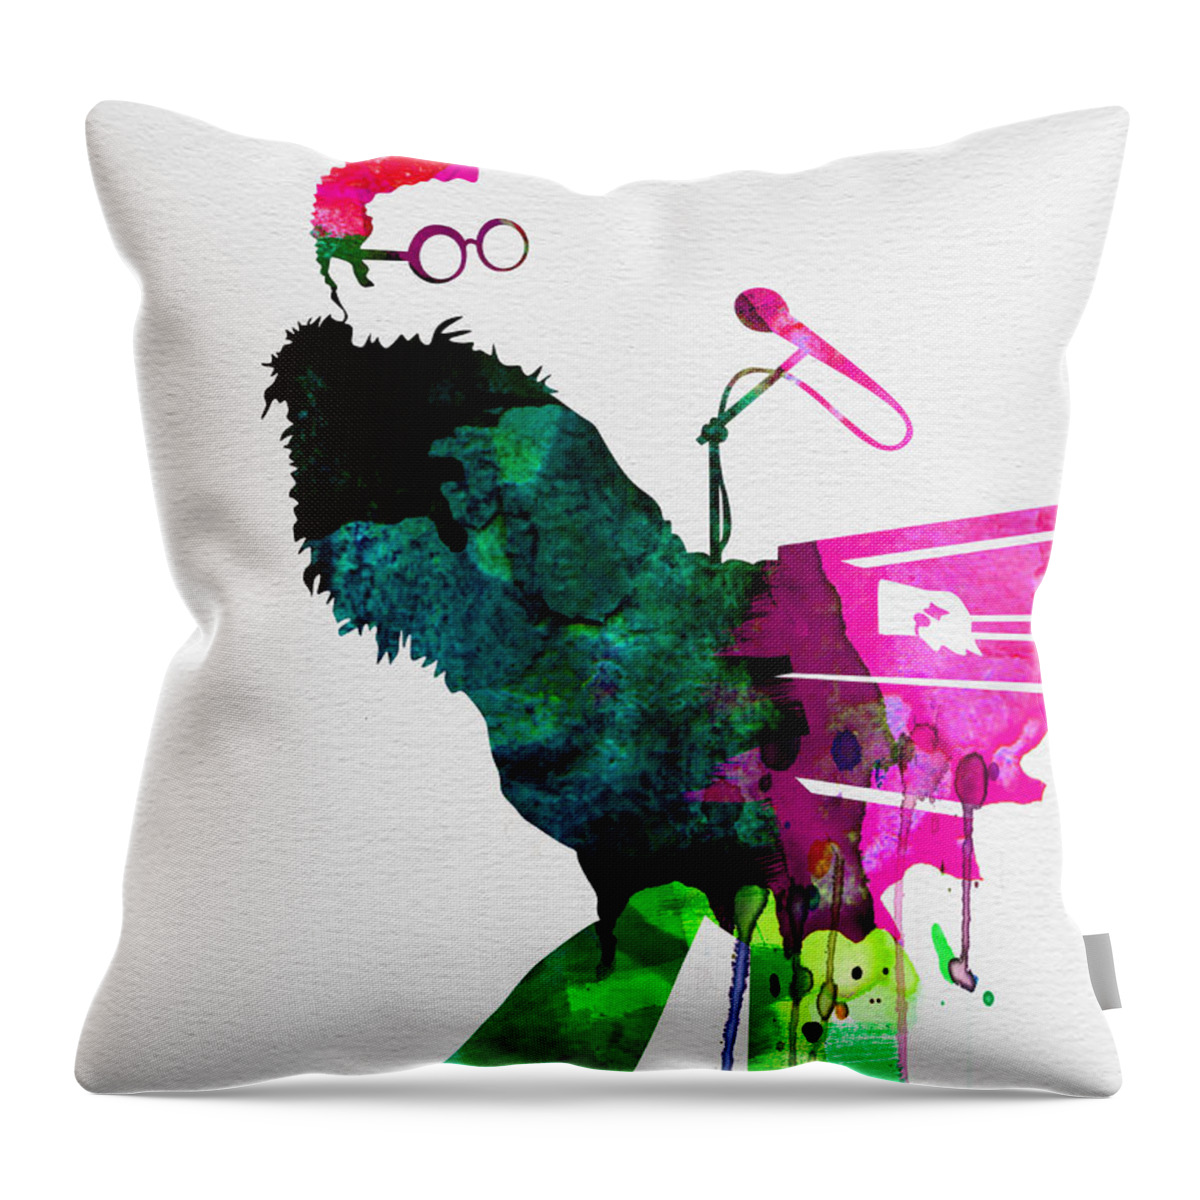 Elton Throw Pillow featuring the painting Elton Watercolor by Naxart Studio